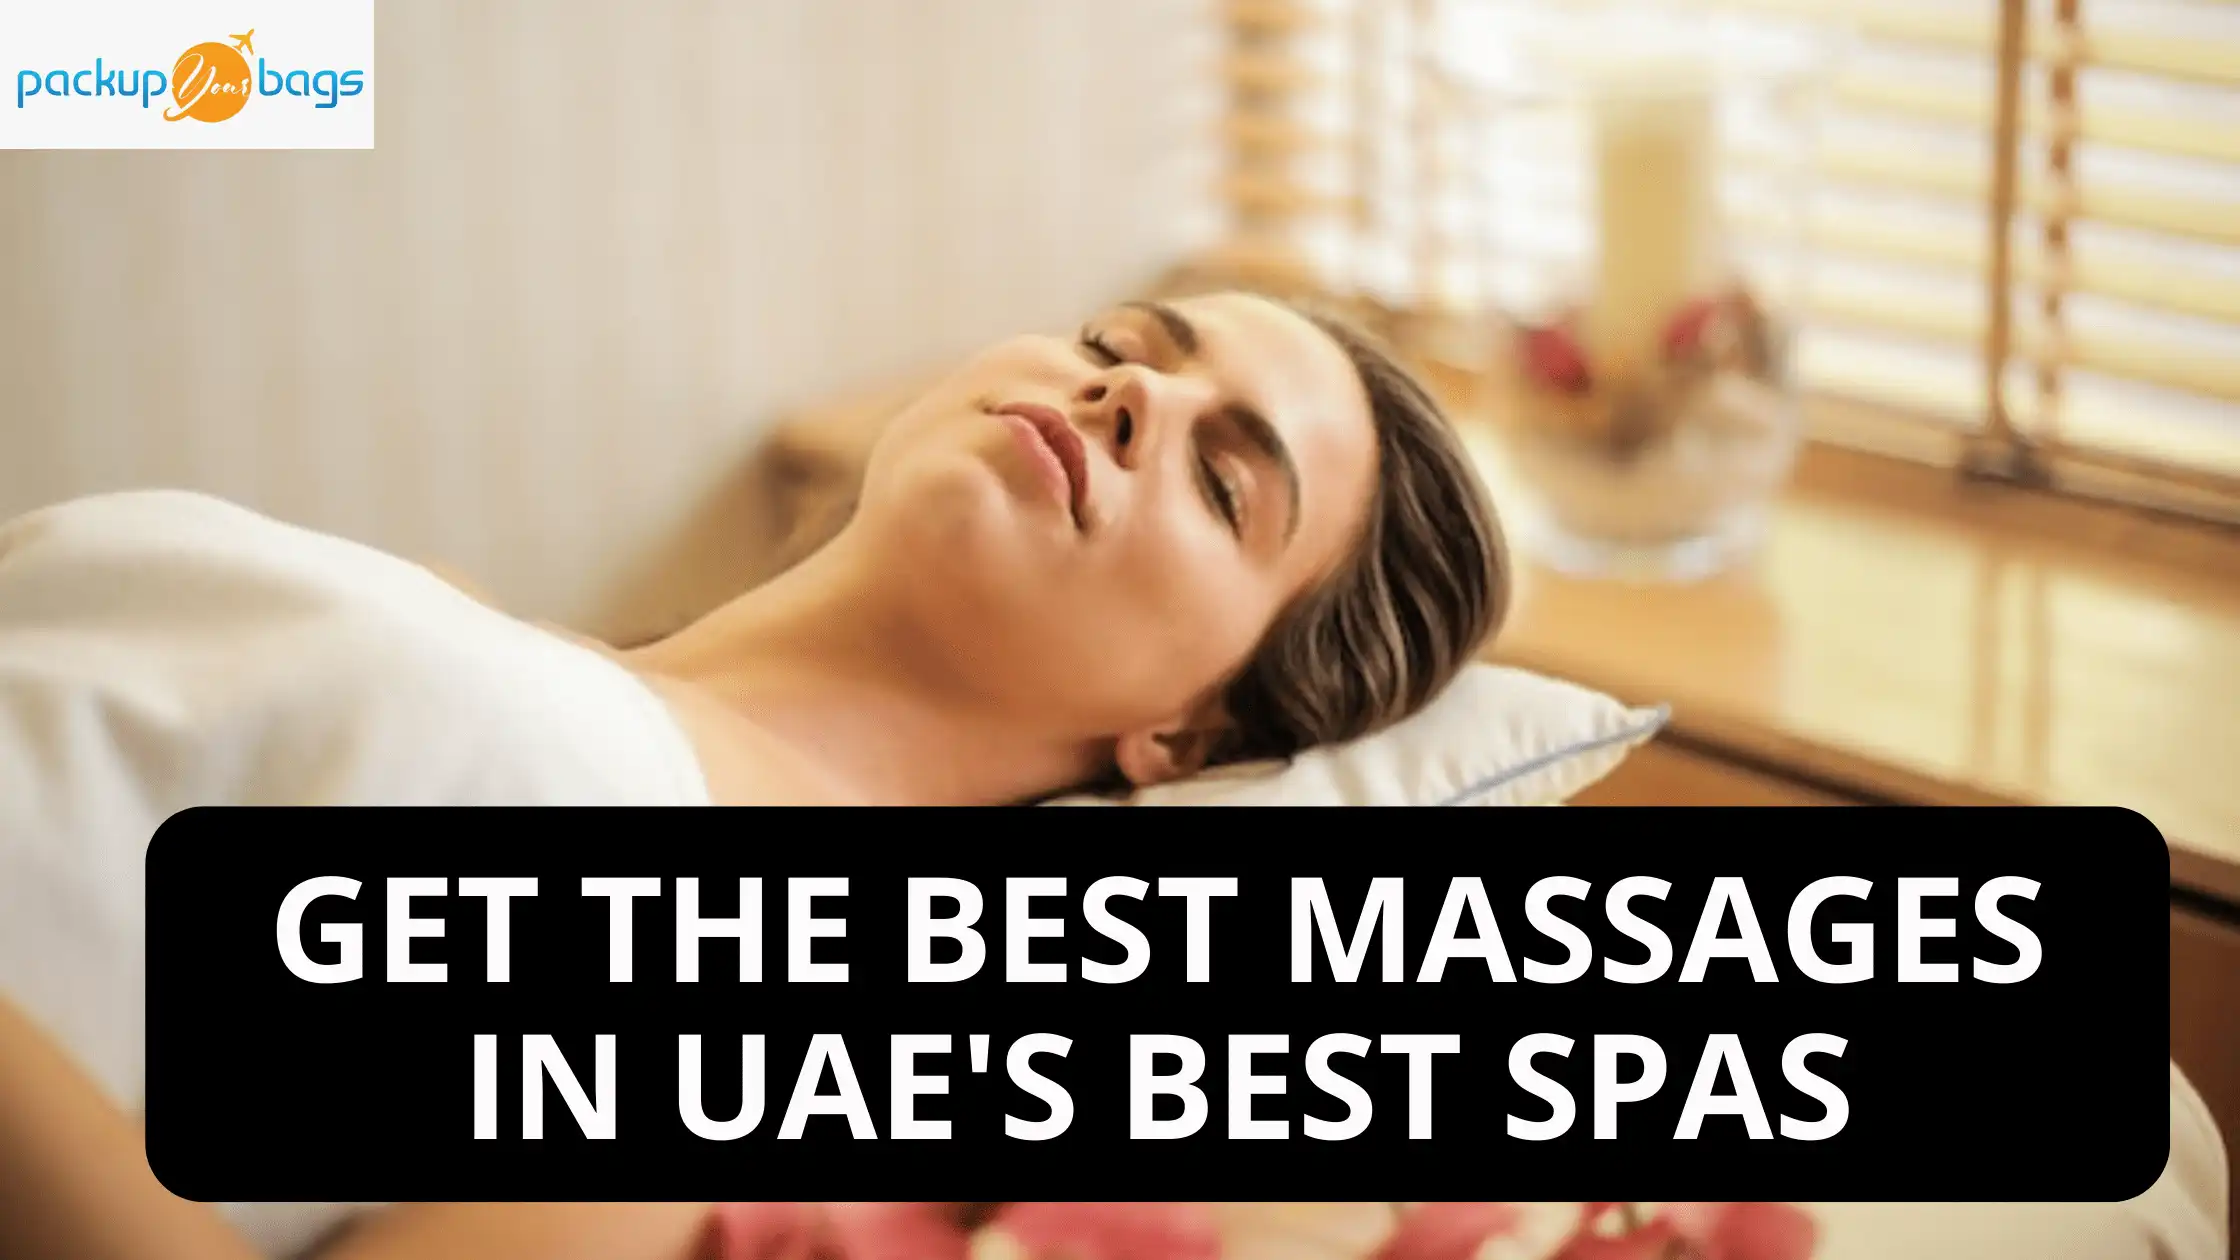 Get the best massages in UAE's best spas